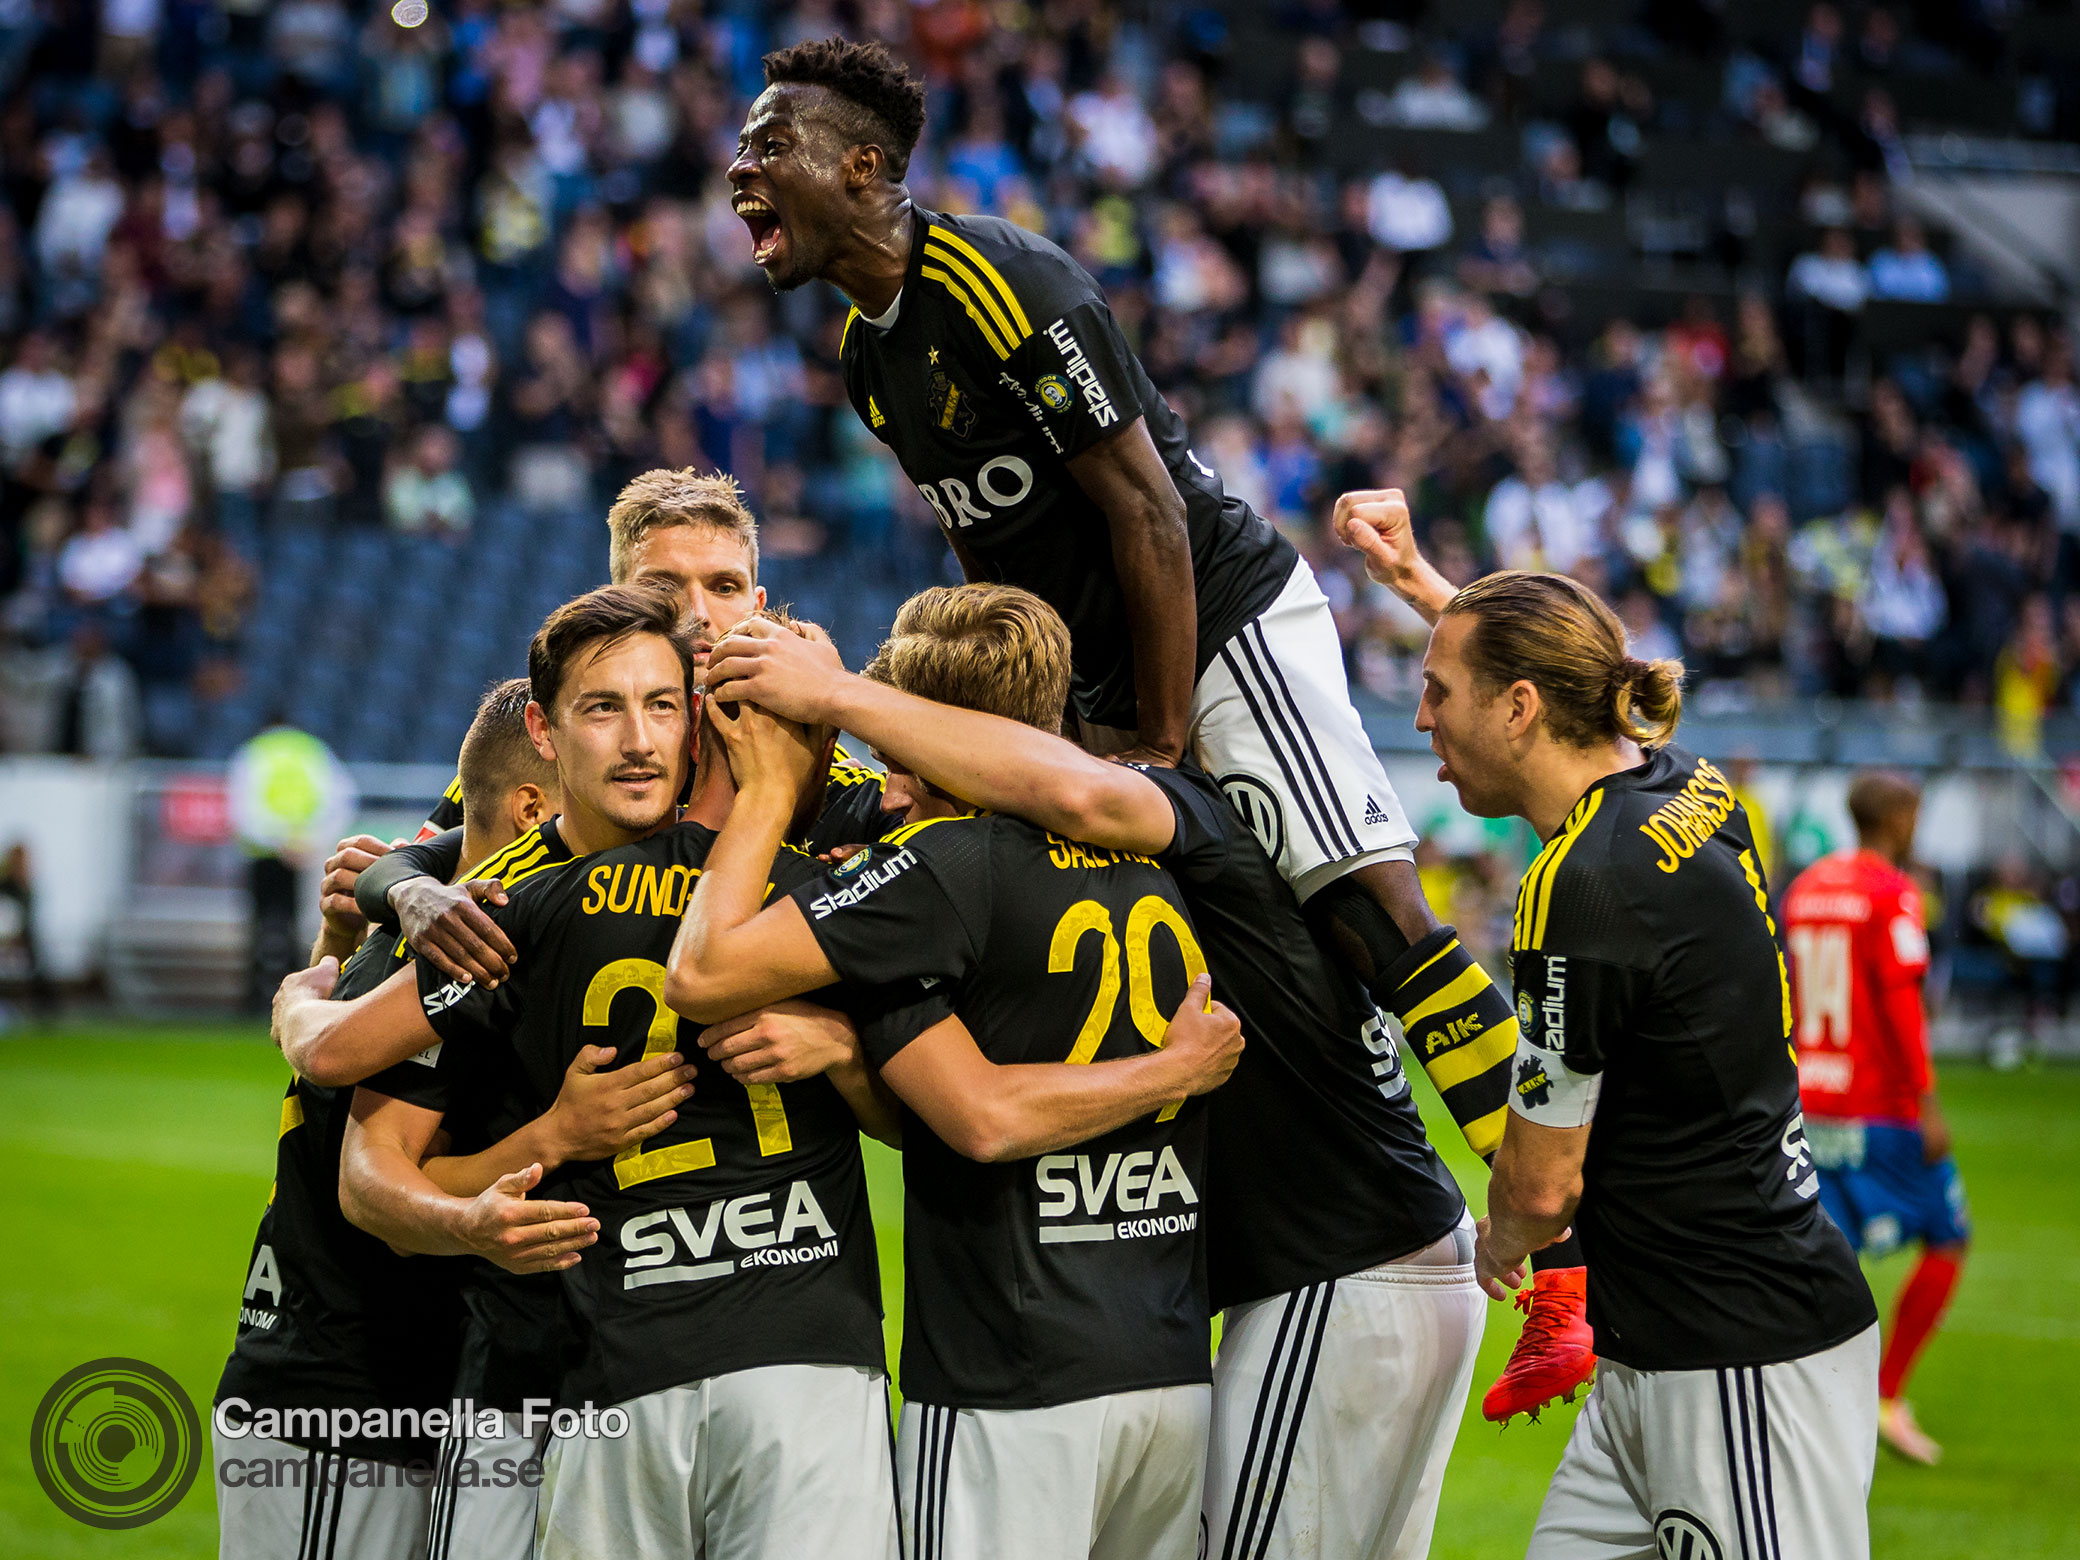 AIK comeback to win against Helsingborg - Michael Campanella Photography